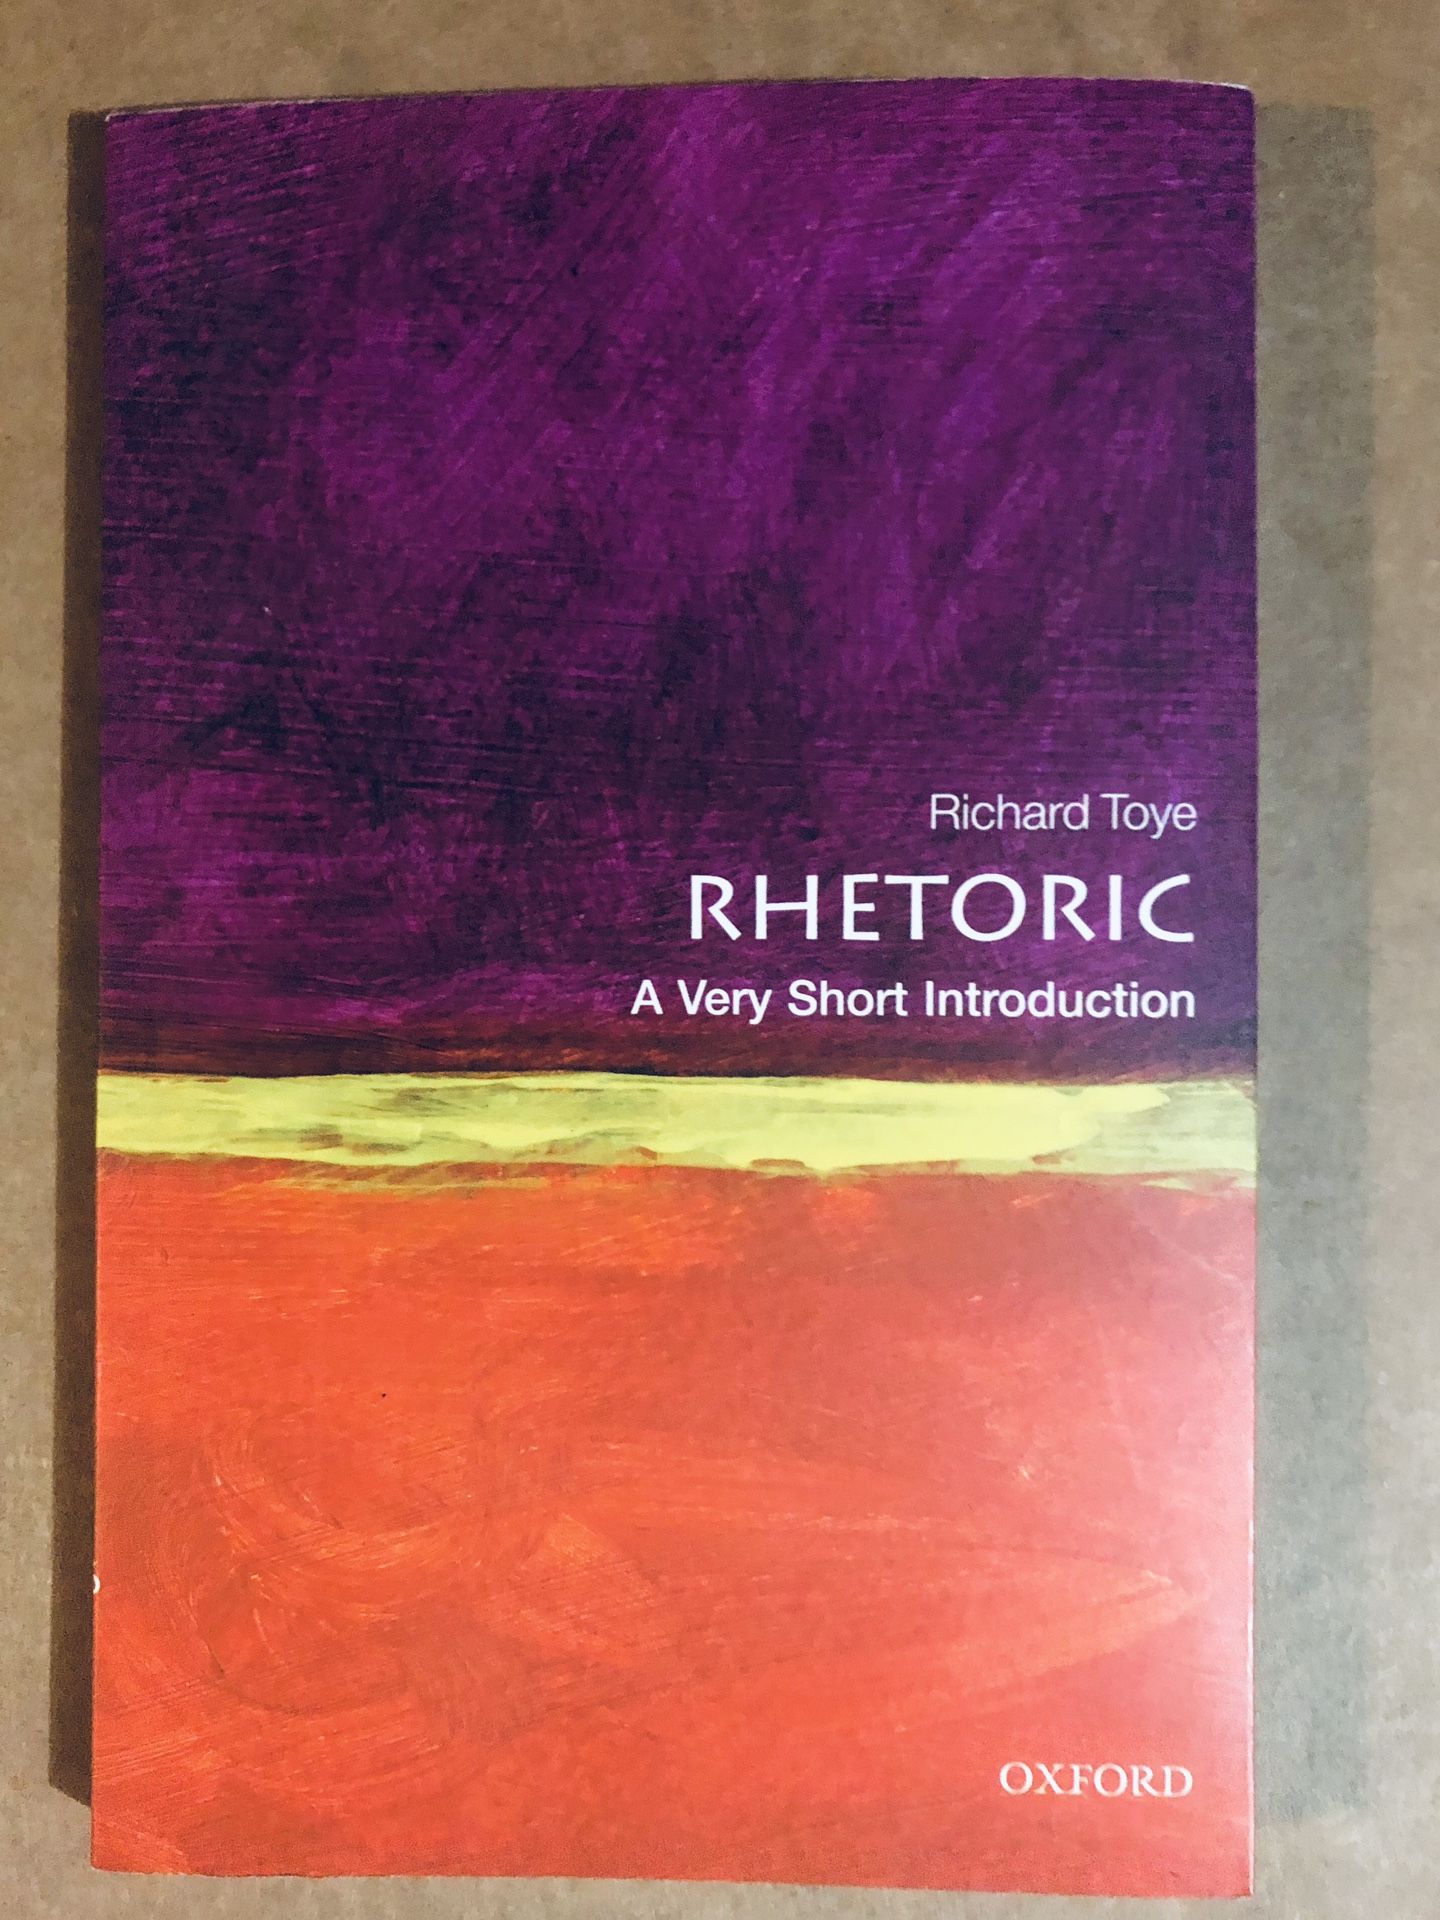 Rhetoric book for Writing 102